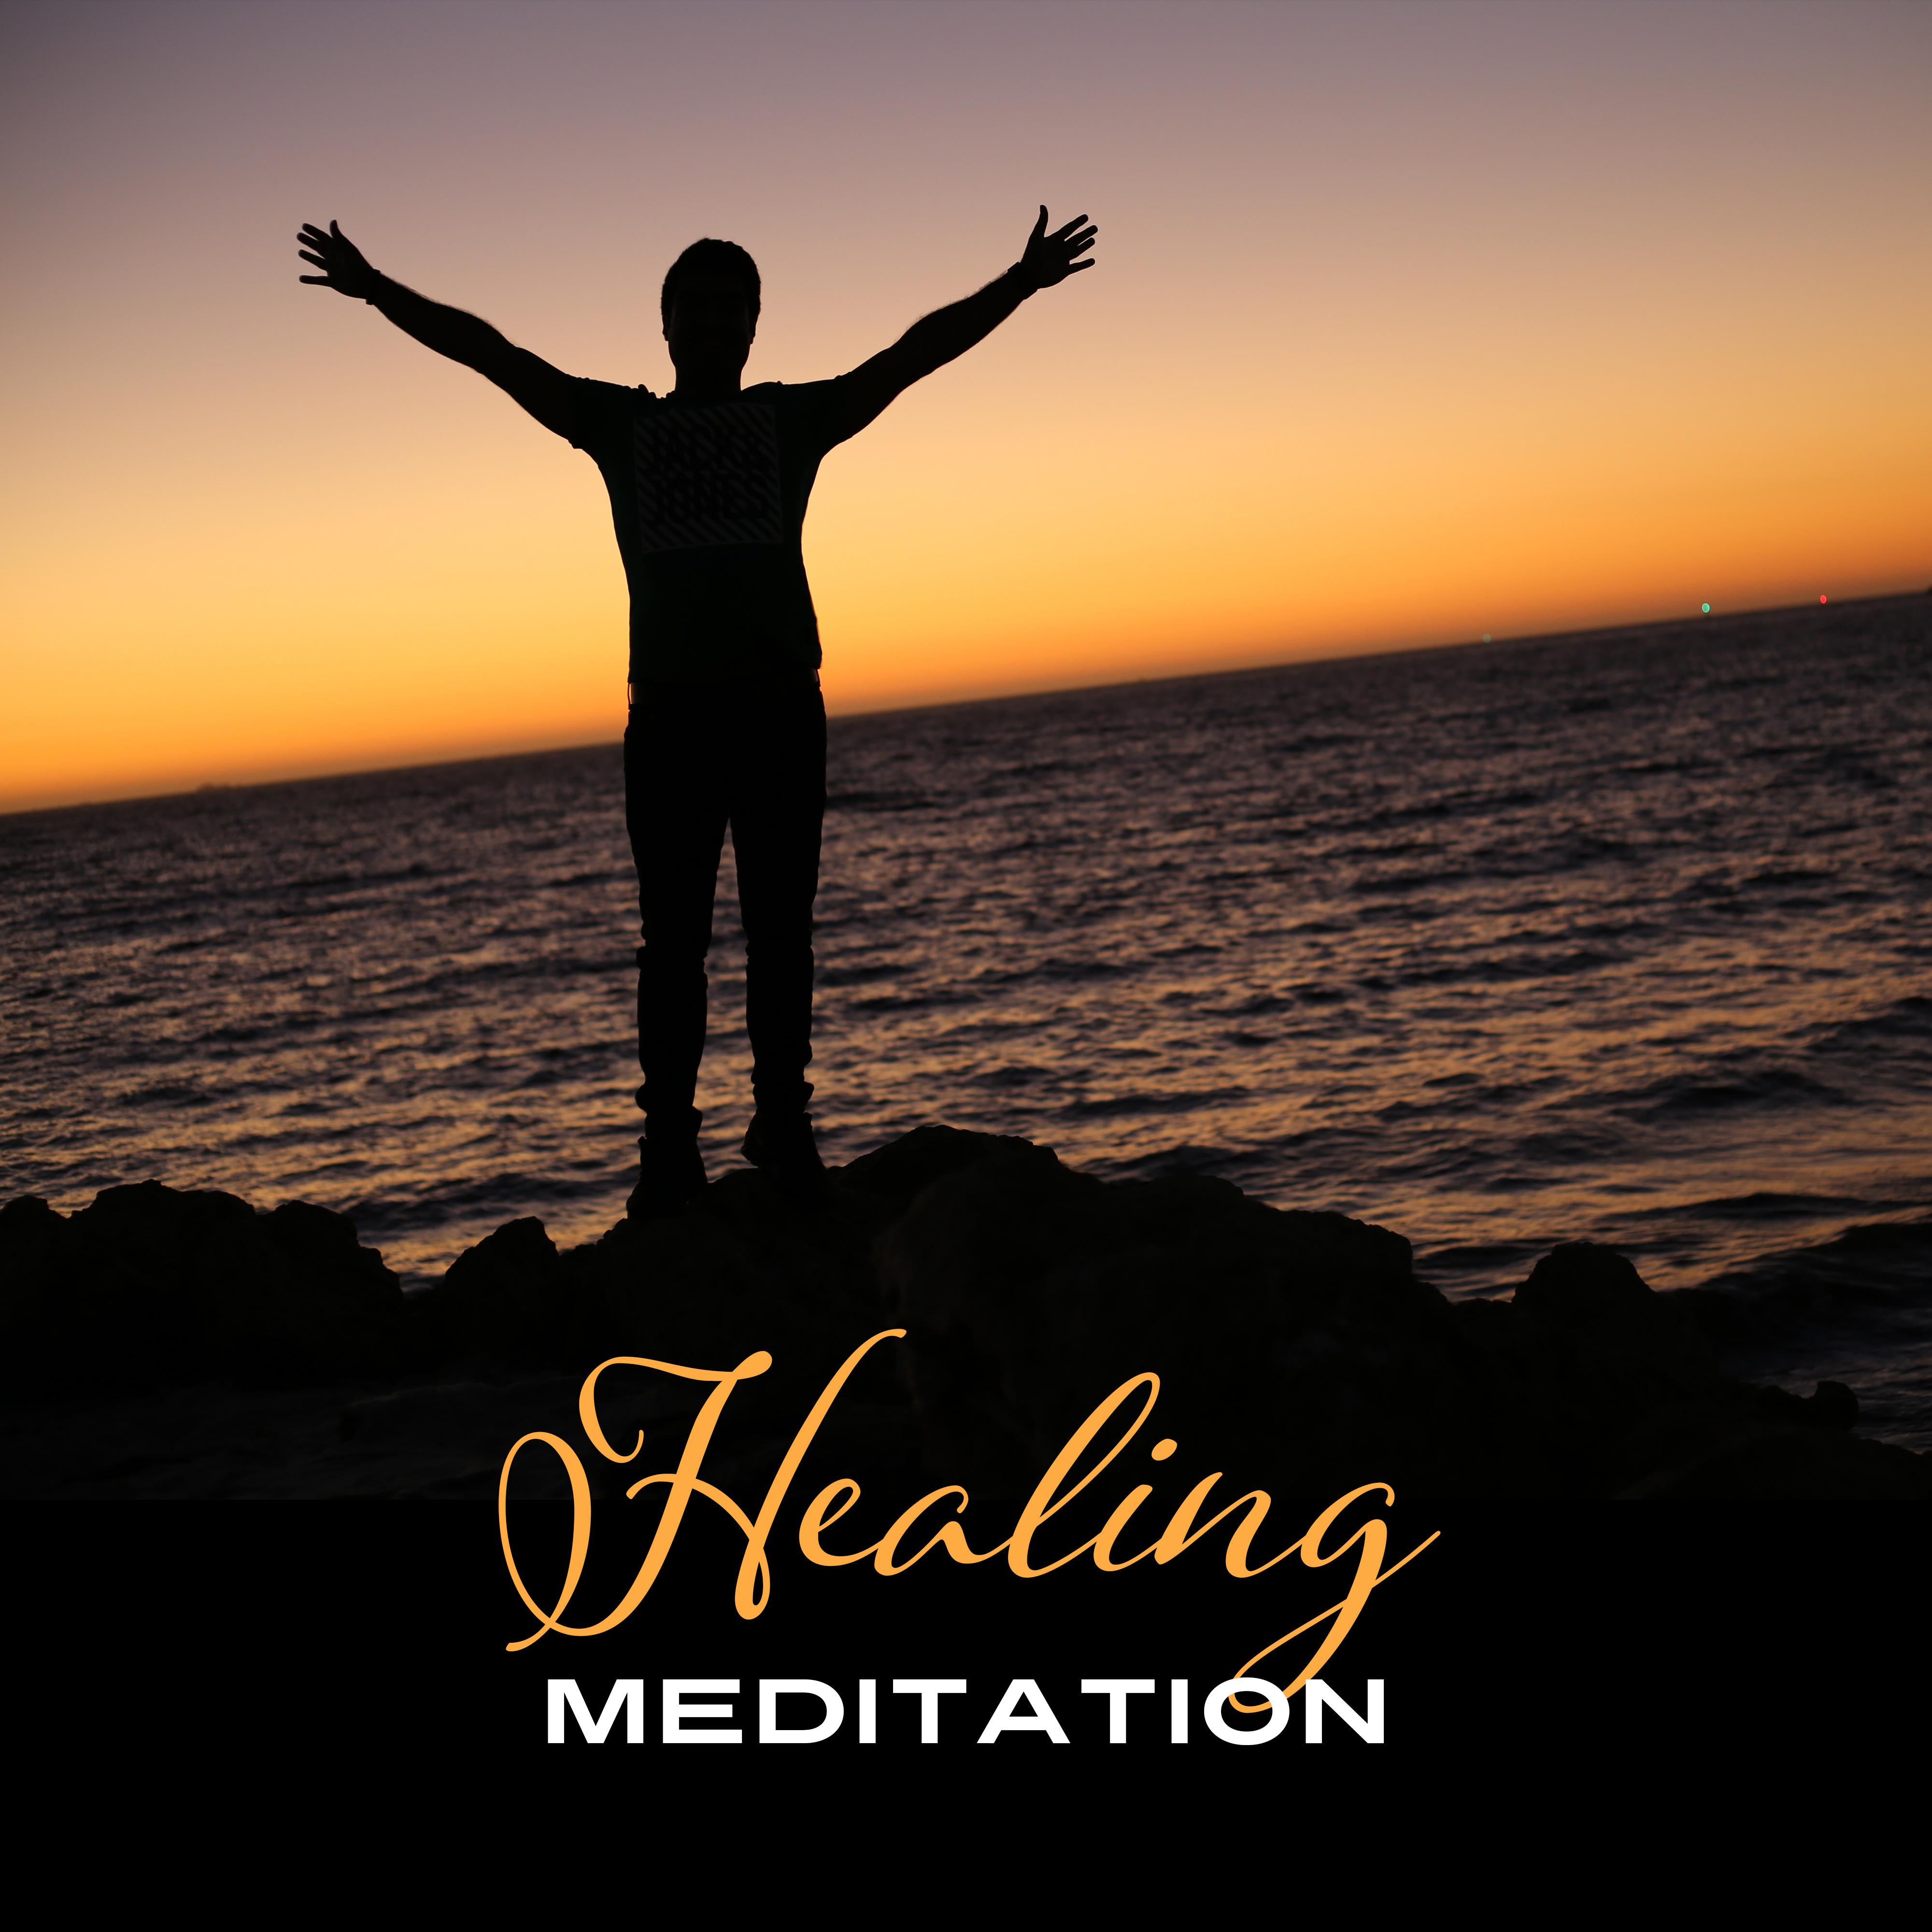 Healing Meditation  Training Yoga, Stress Relief, Deep Meditation, Better Concentration, Rest